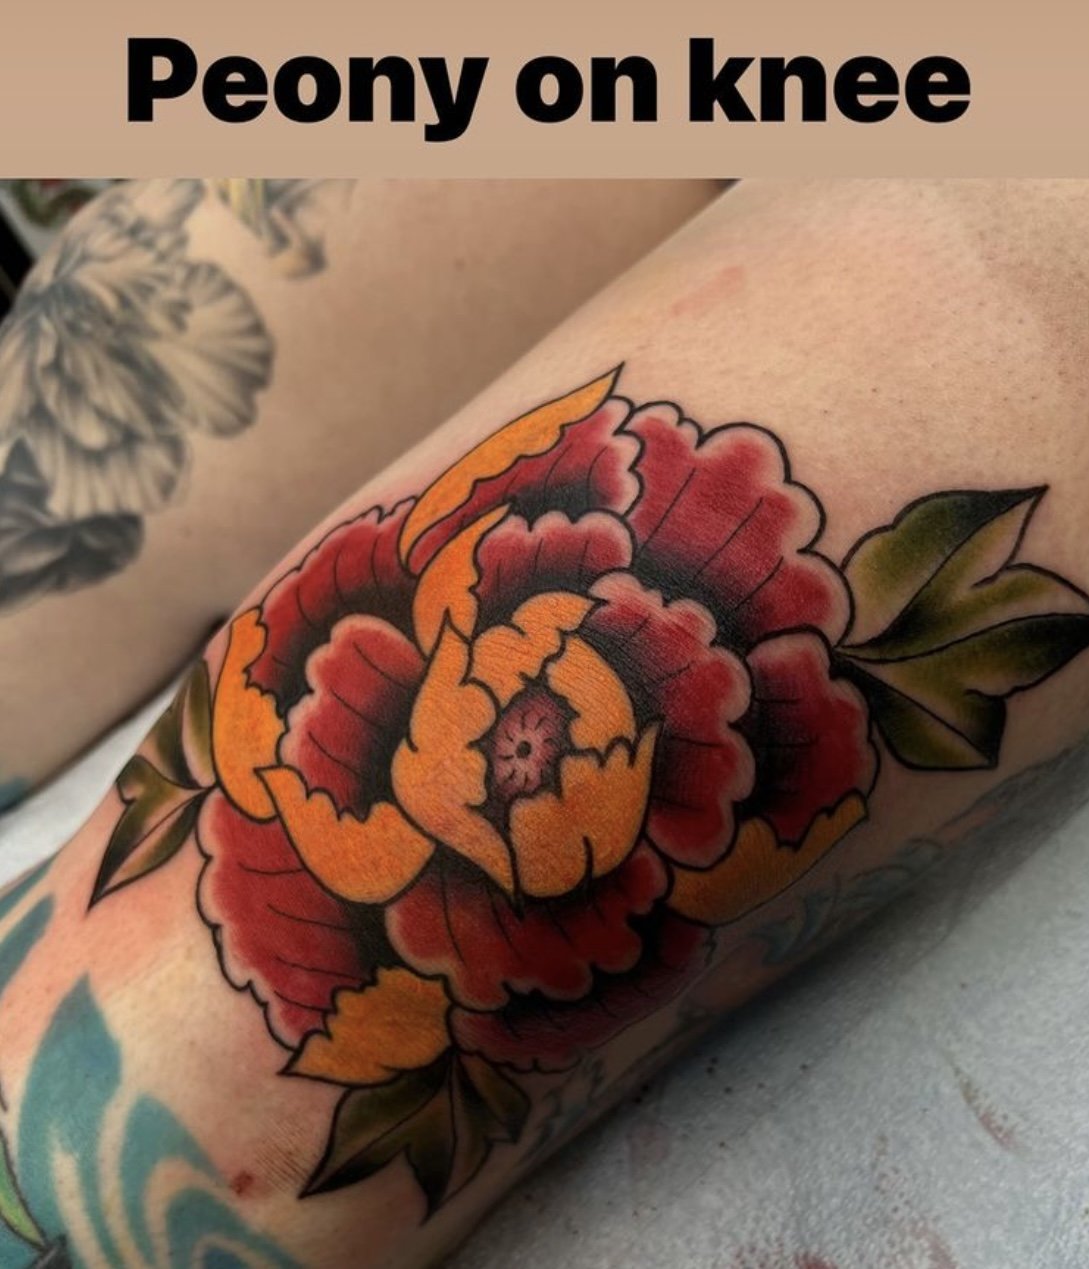 Top more than 69 peony knee tattoo latest  incdgdbentre